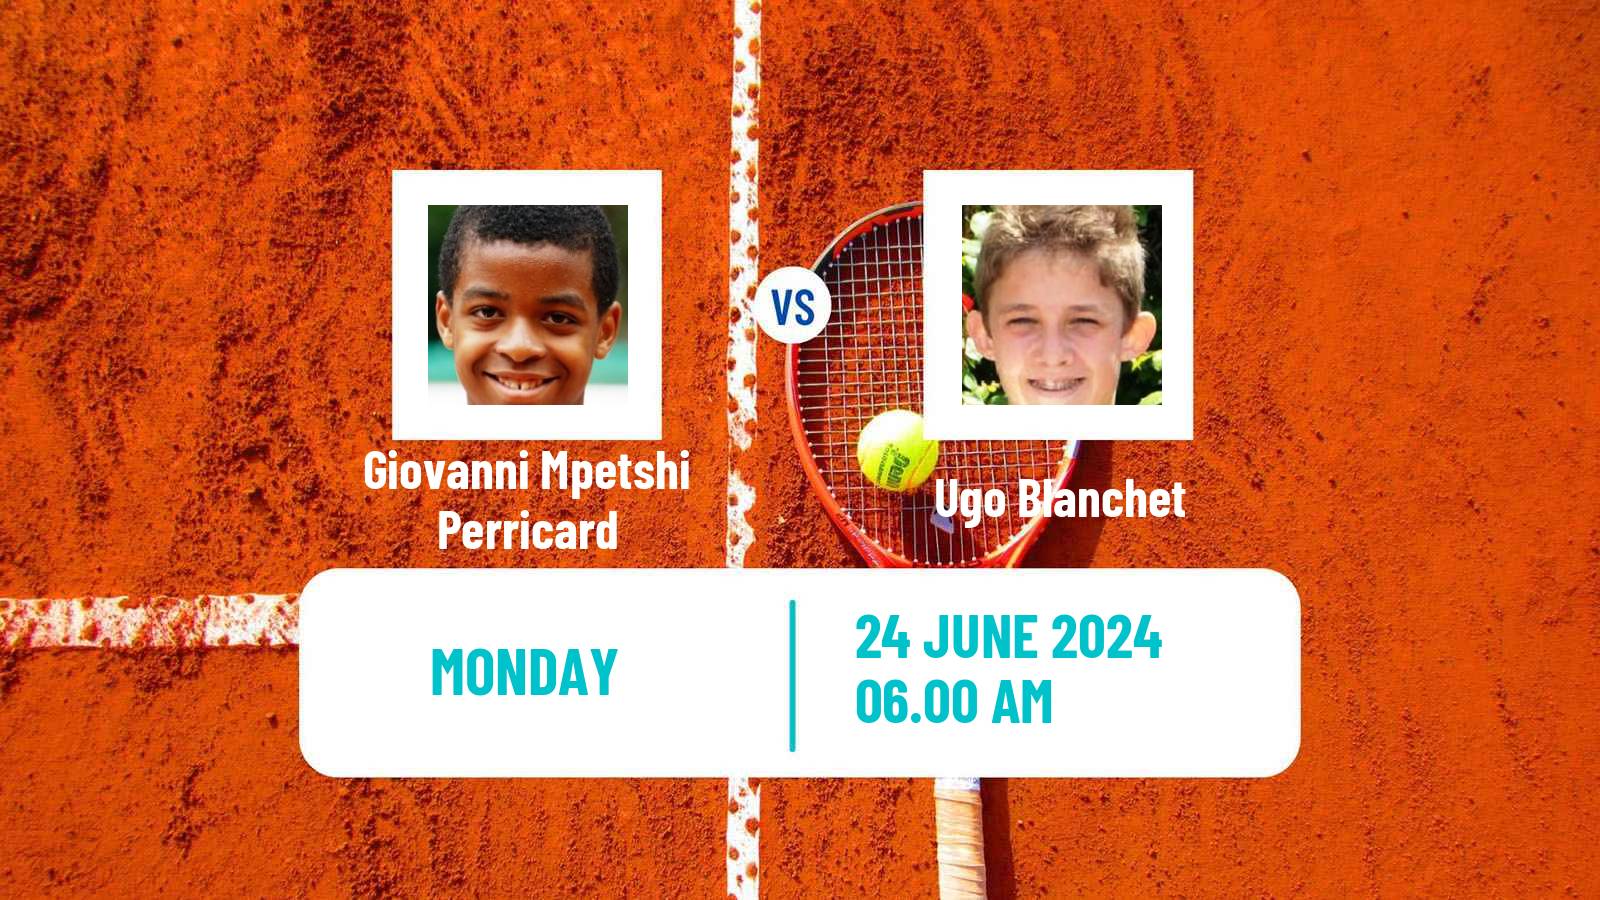 Tennis ATP Wimbledon Giovanni Mpetshi Perricard - Ugo Blanchet